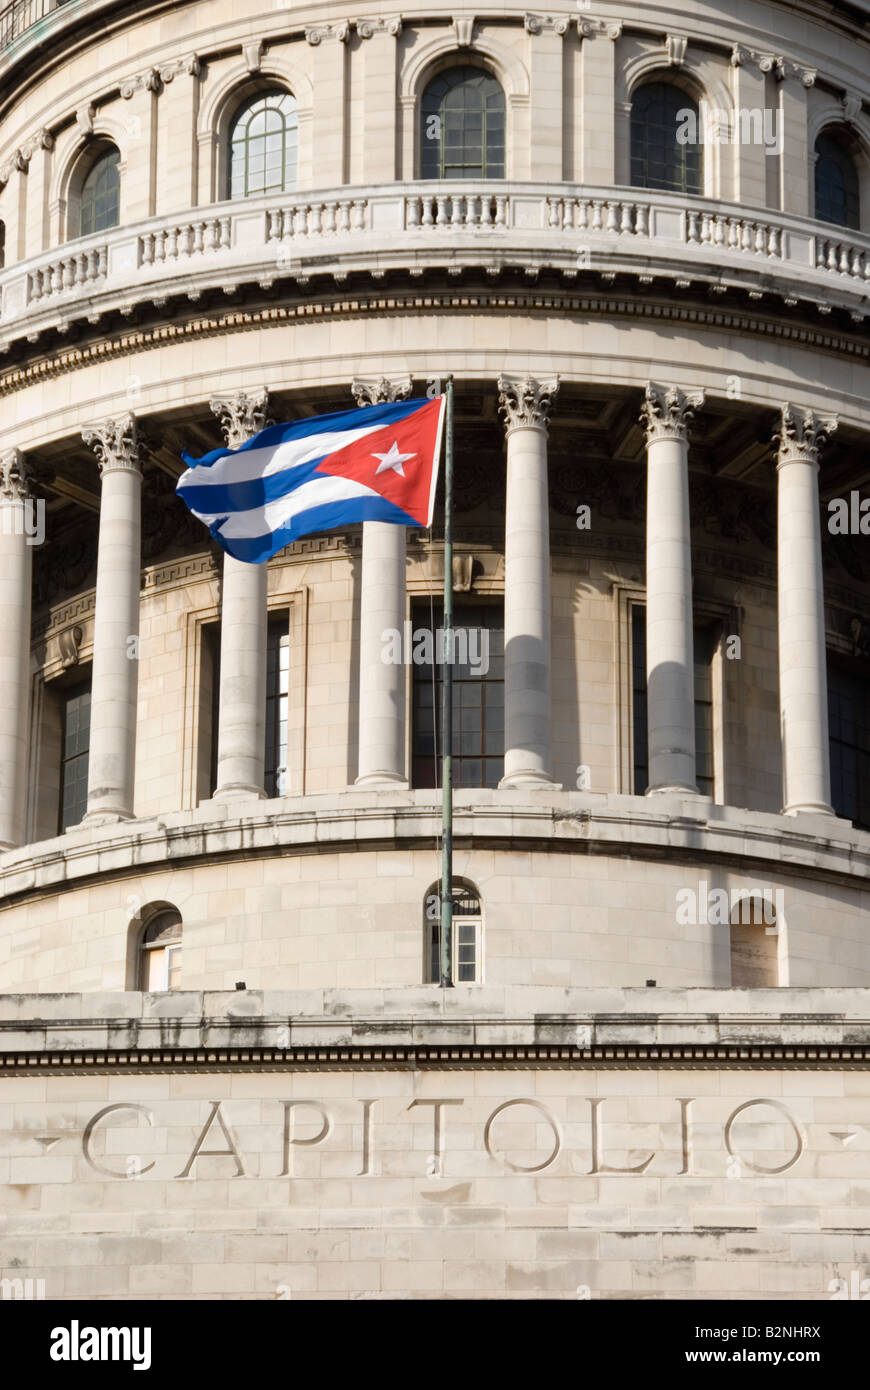 Cuban national flag flying on the Capitolio in La Habana Vieja Havana Cuba Stock Photo